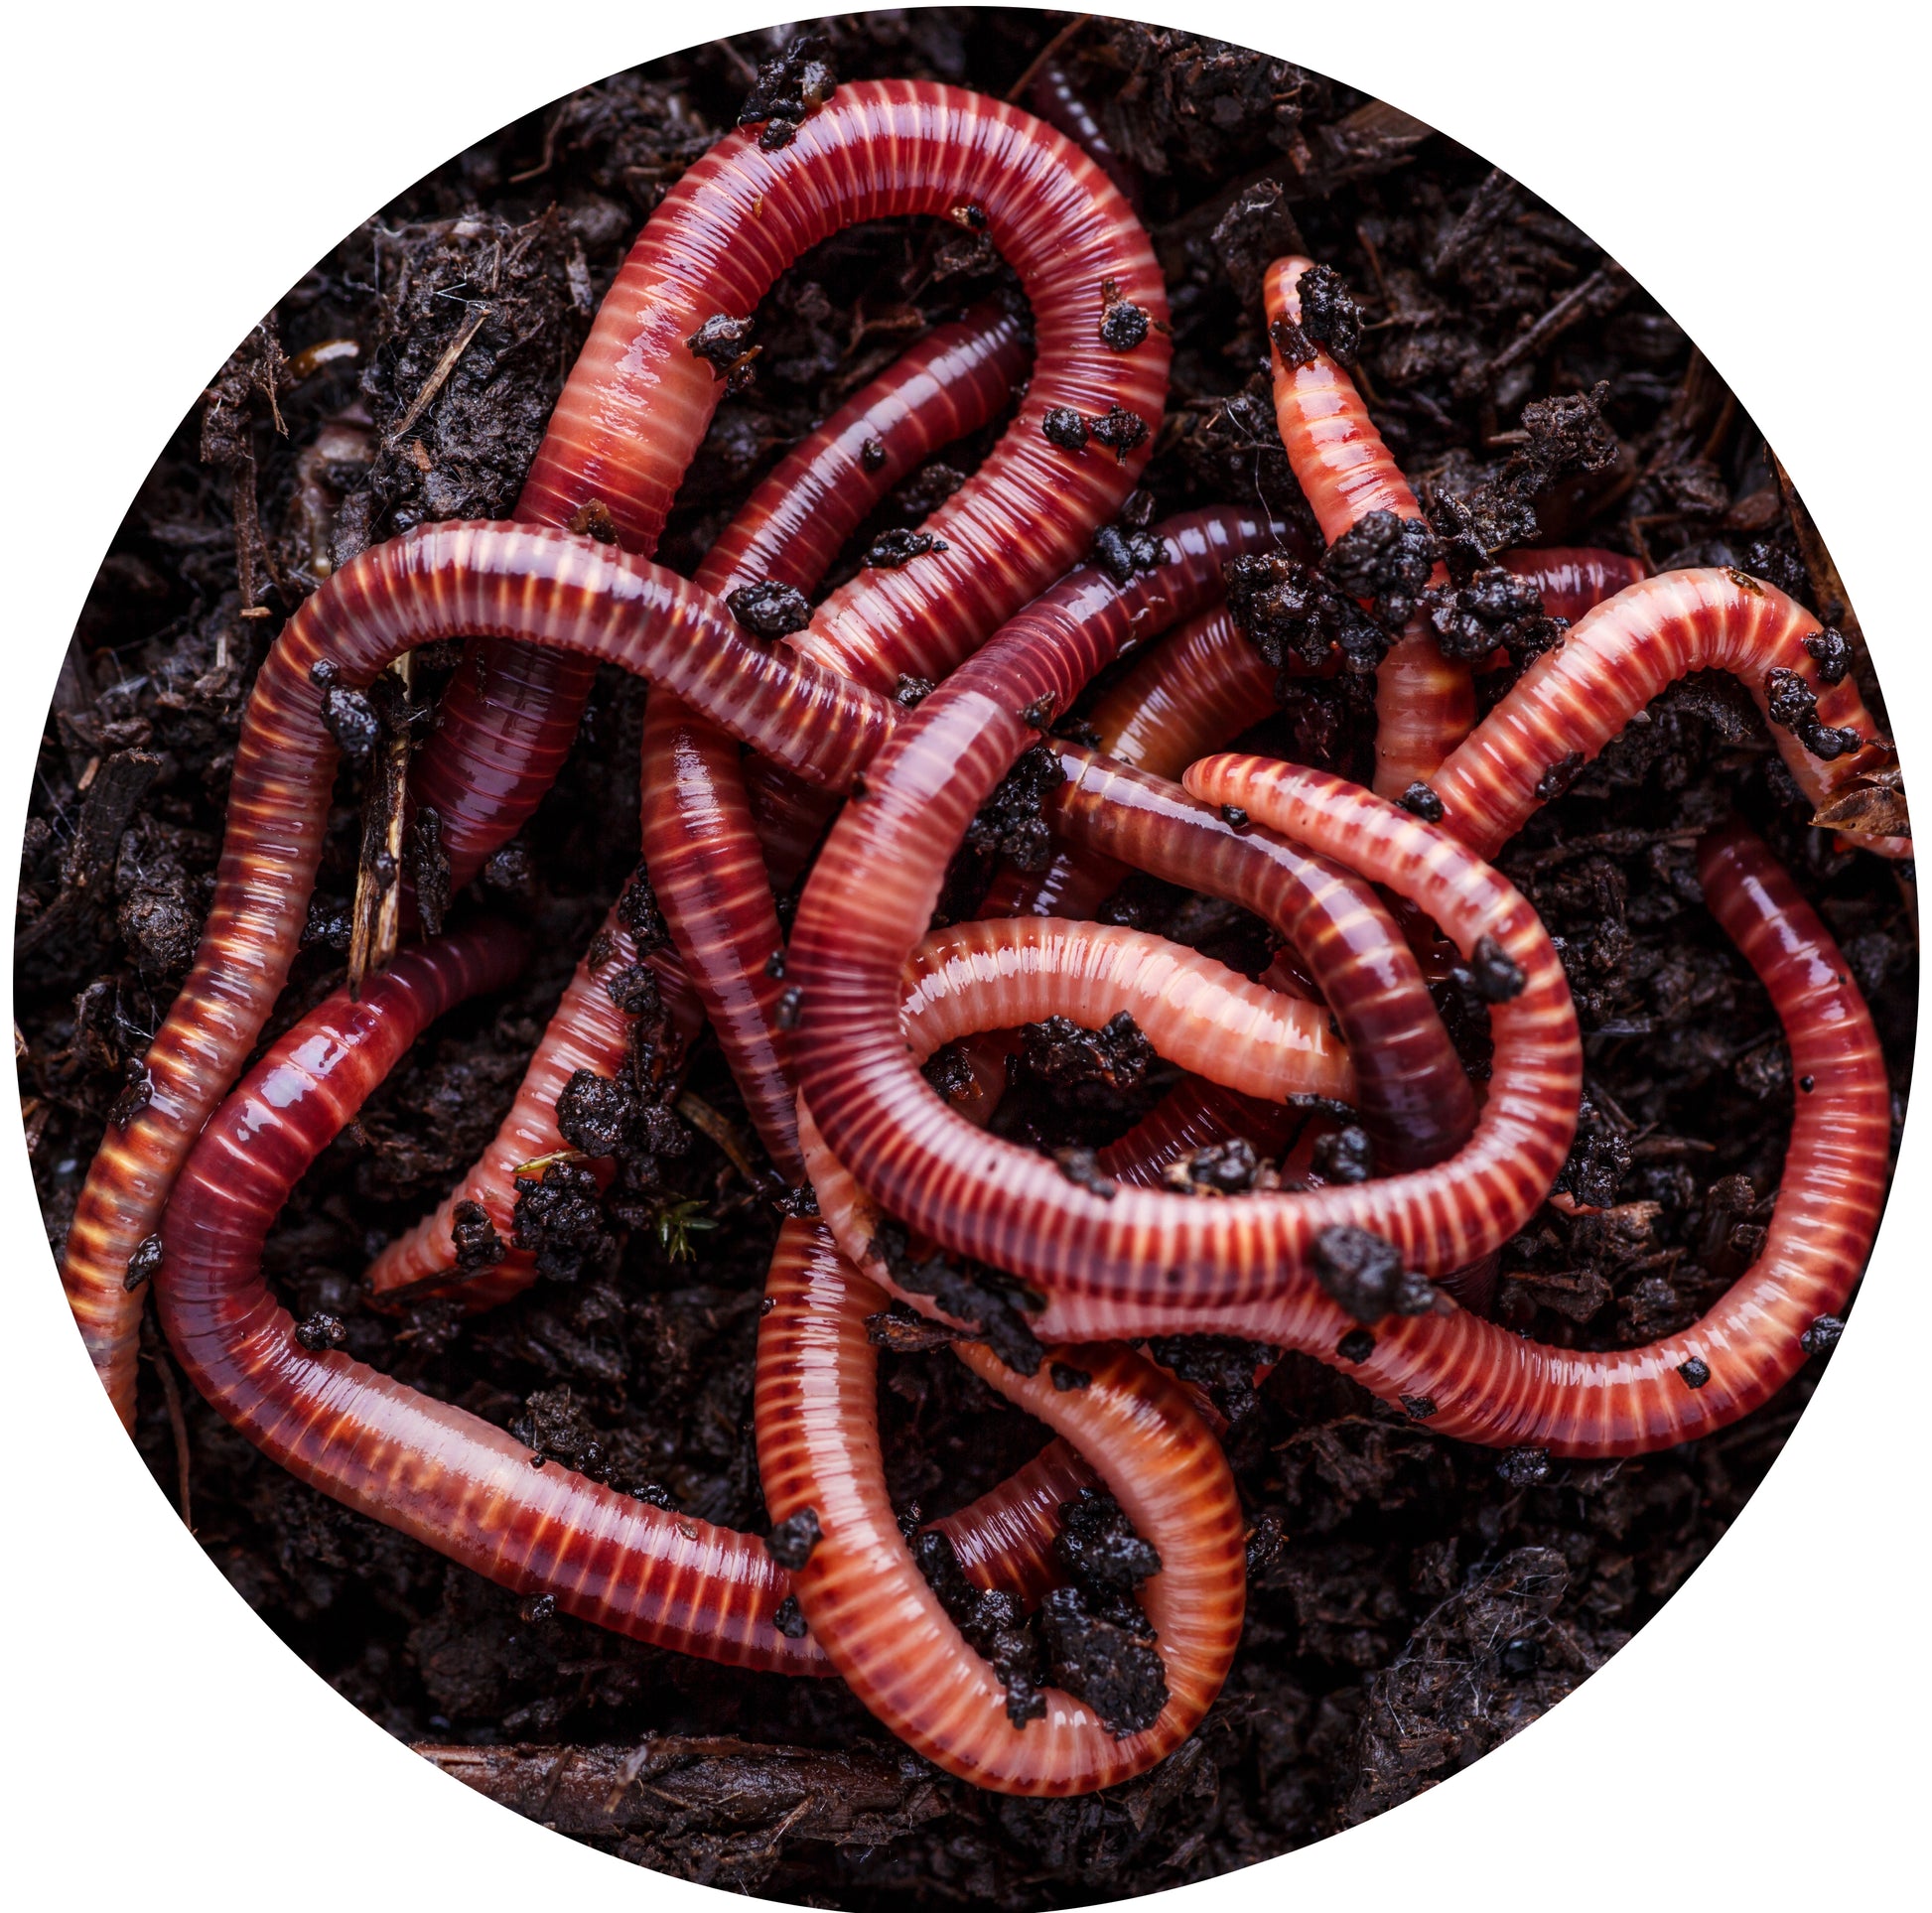 Live Worms – centralcoastwf